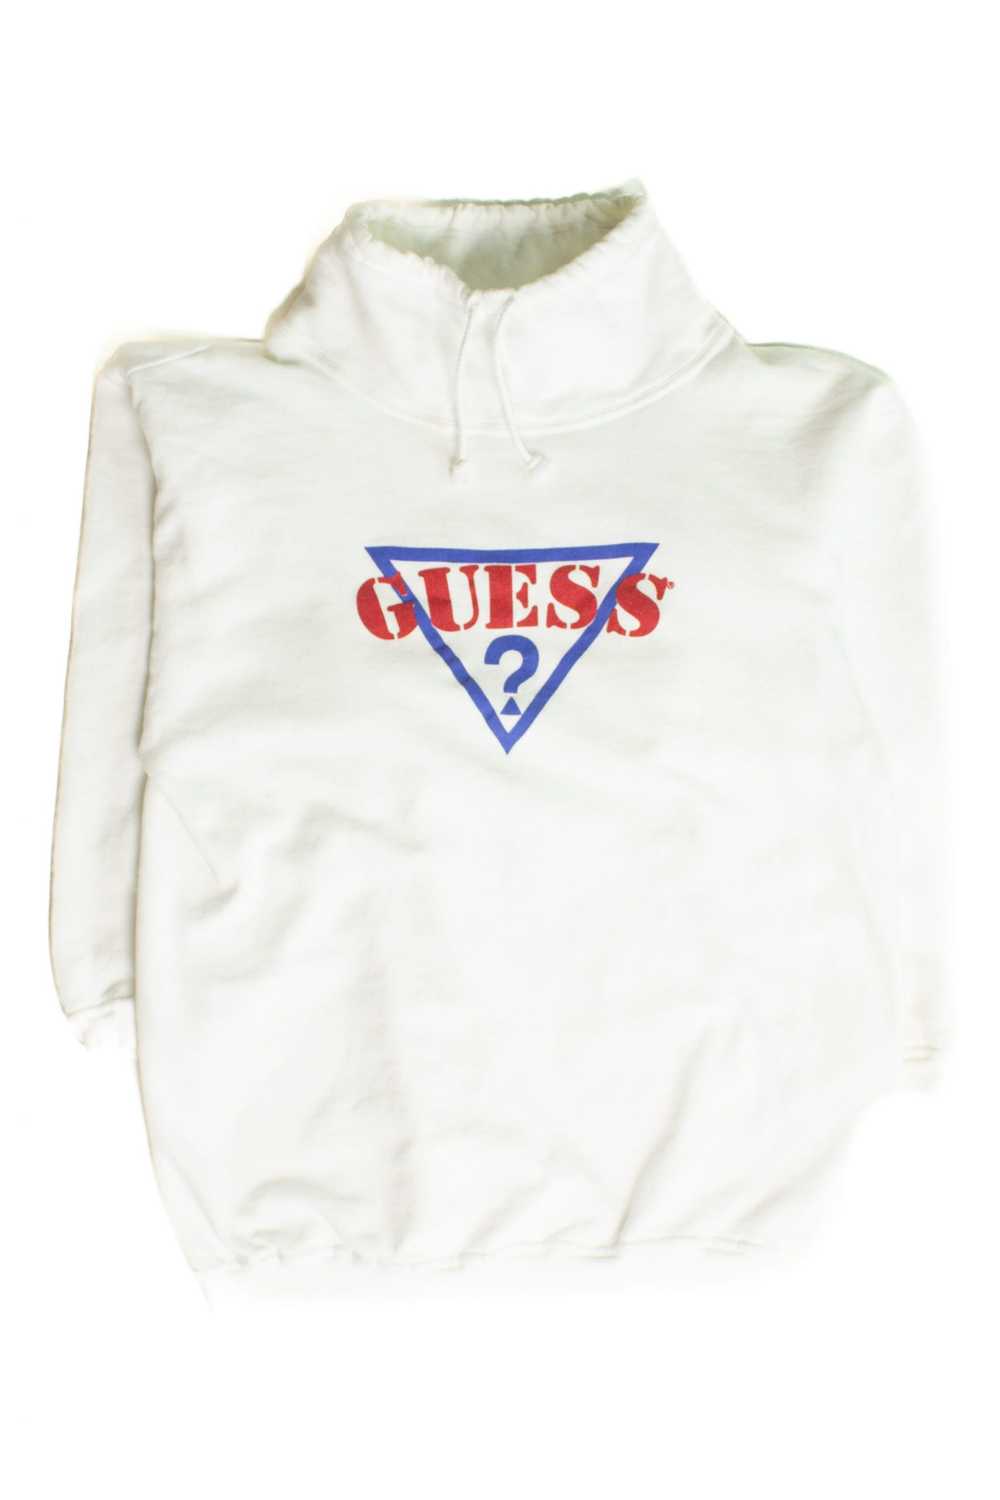 Vintage Guess Cowl Neck Sweatshirt (1990s) - image 2